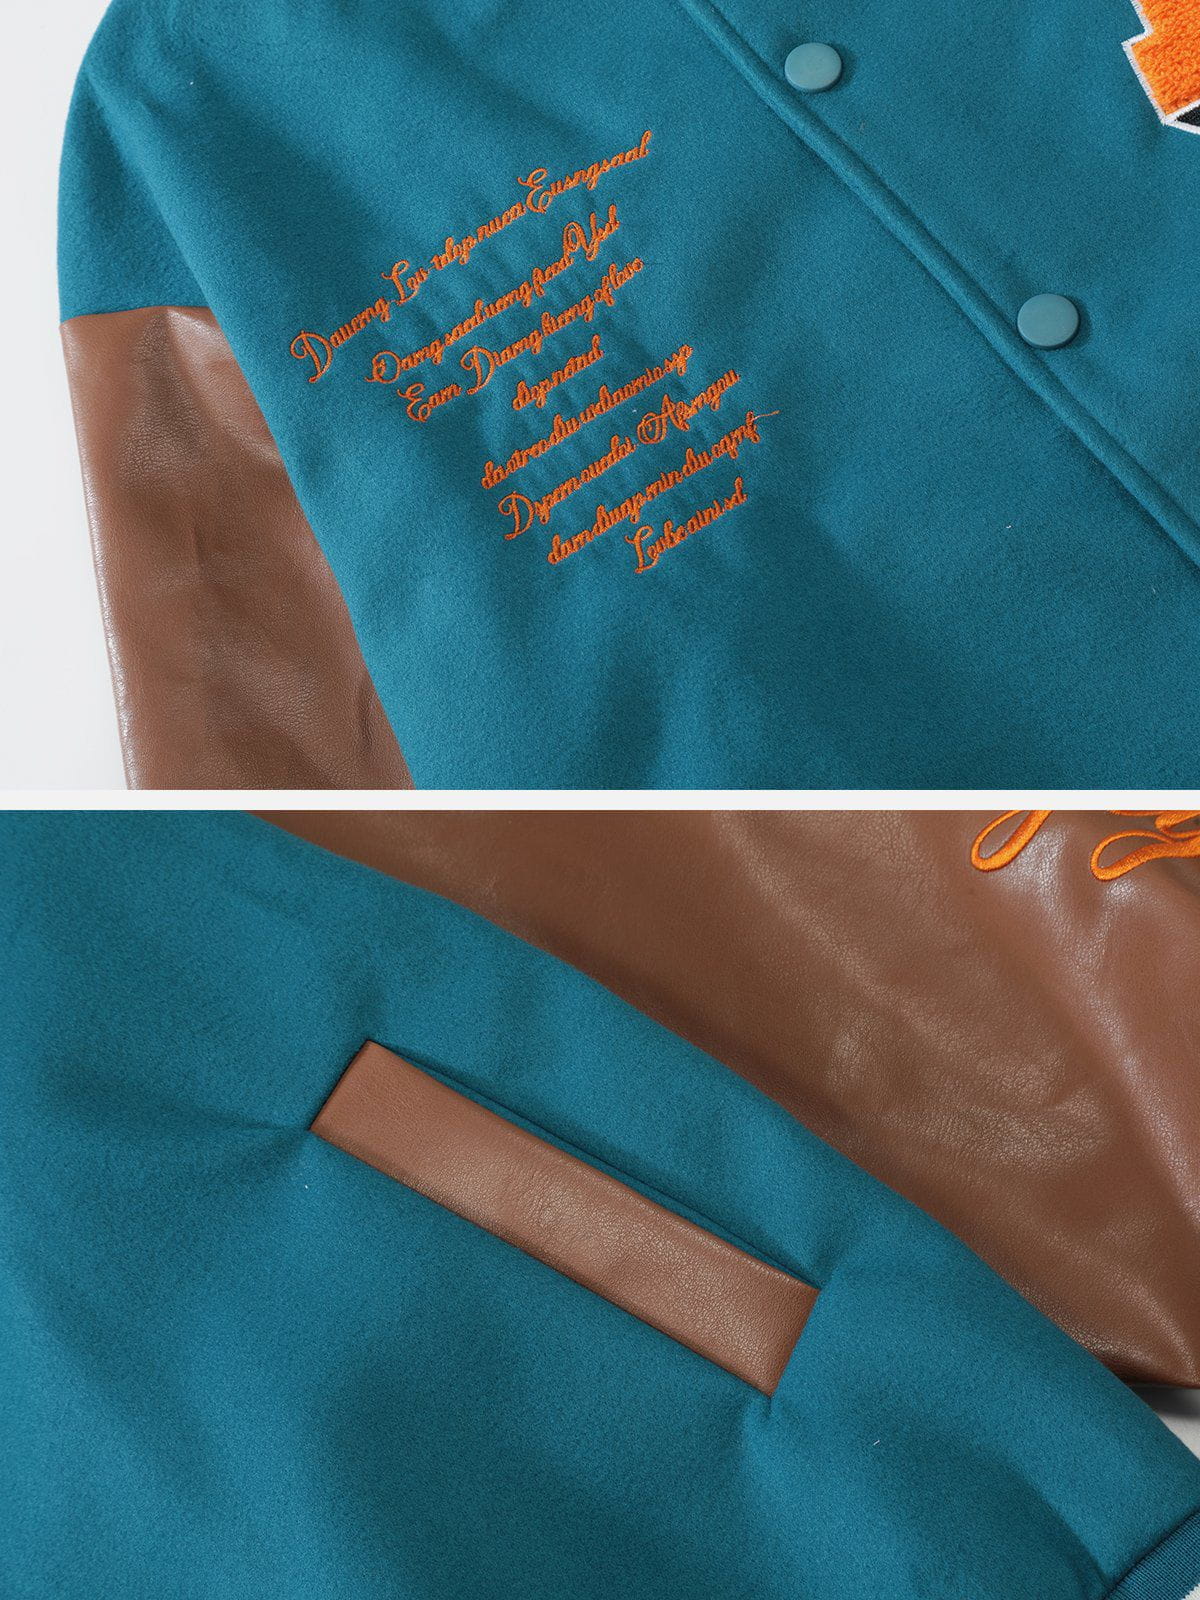 LUXENFY™ - Vintage Contrast Varsity Jacket - 11 luxenfy.com